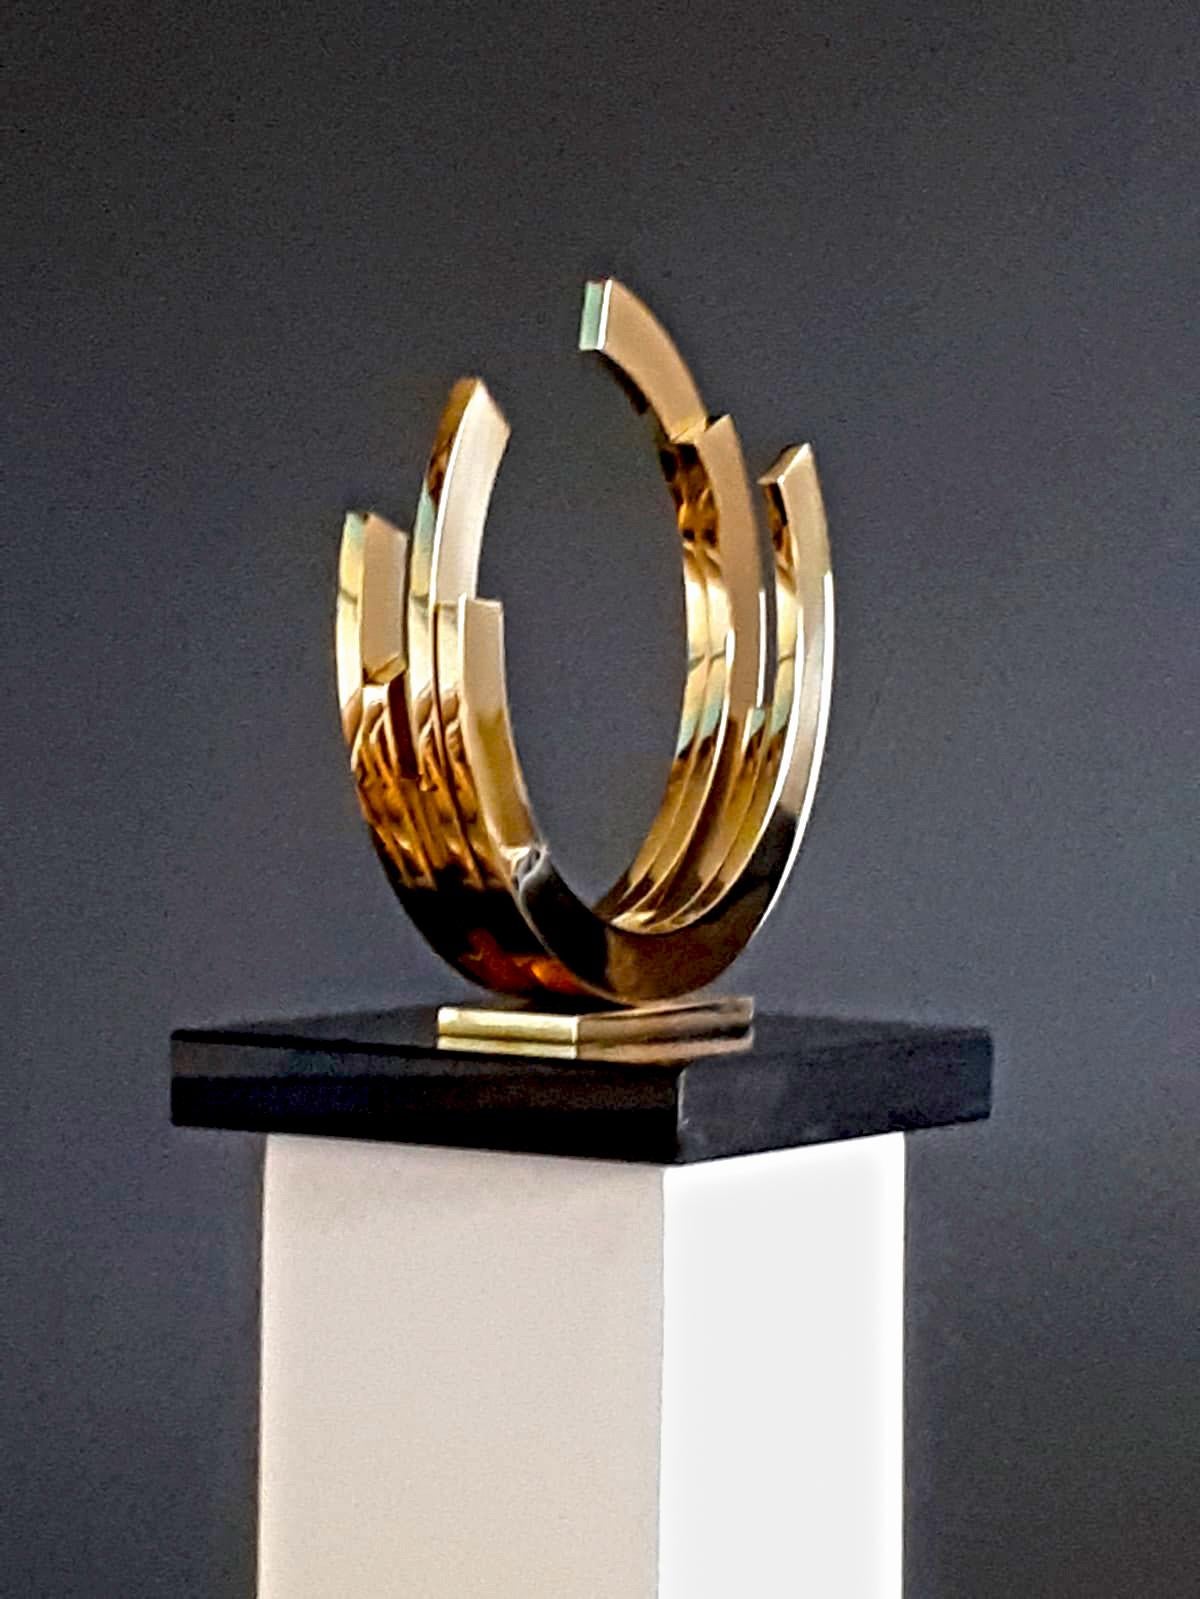 Golden Orbit by Kuno Vollet - Shiny Brass Circle Contemporary Minimal sculpture 2